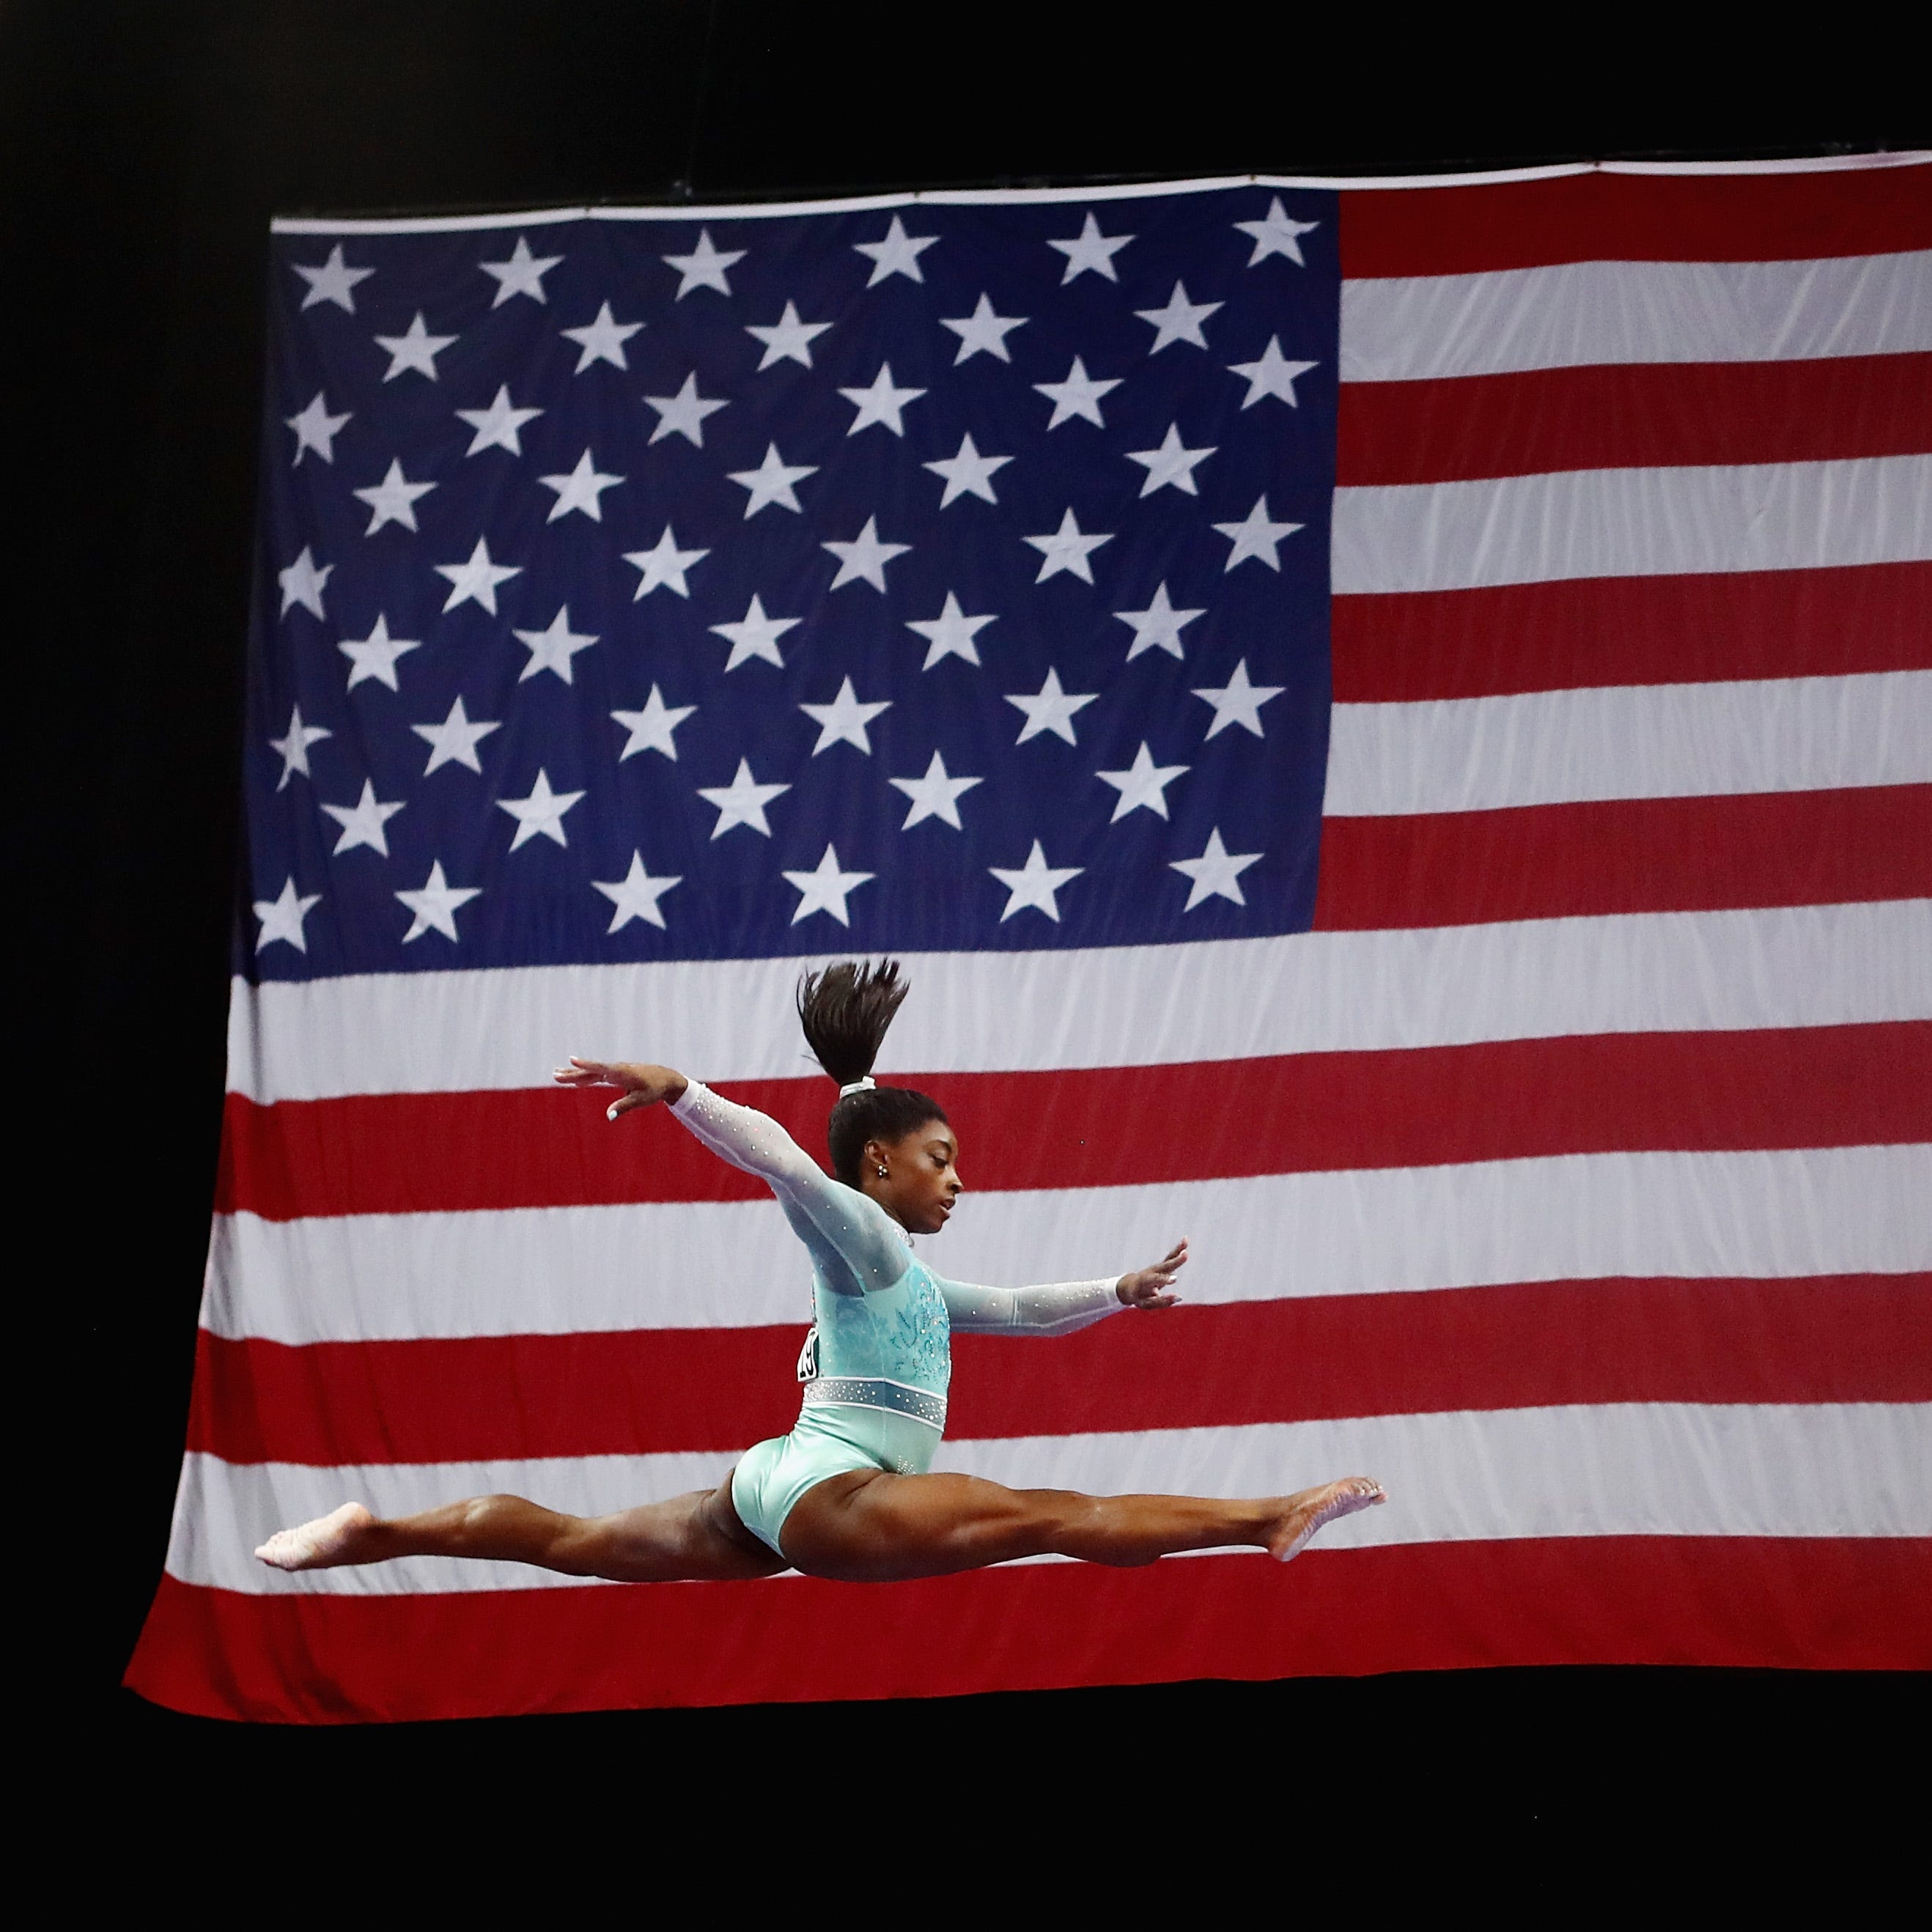 Simone Biles competes on the balance beam at the U.S. Gymnastics Championships.